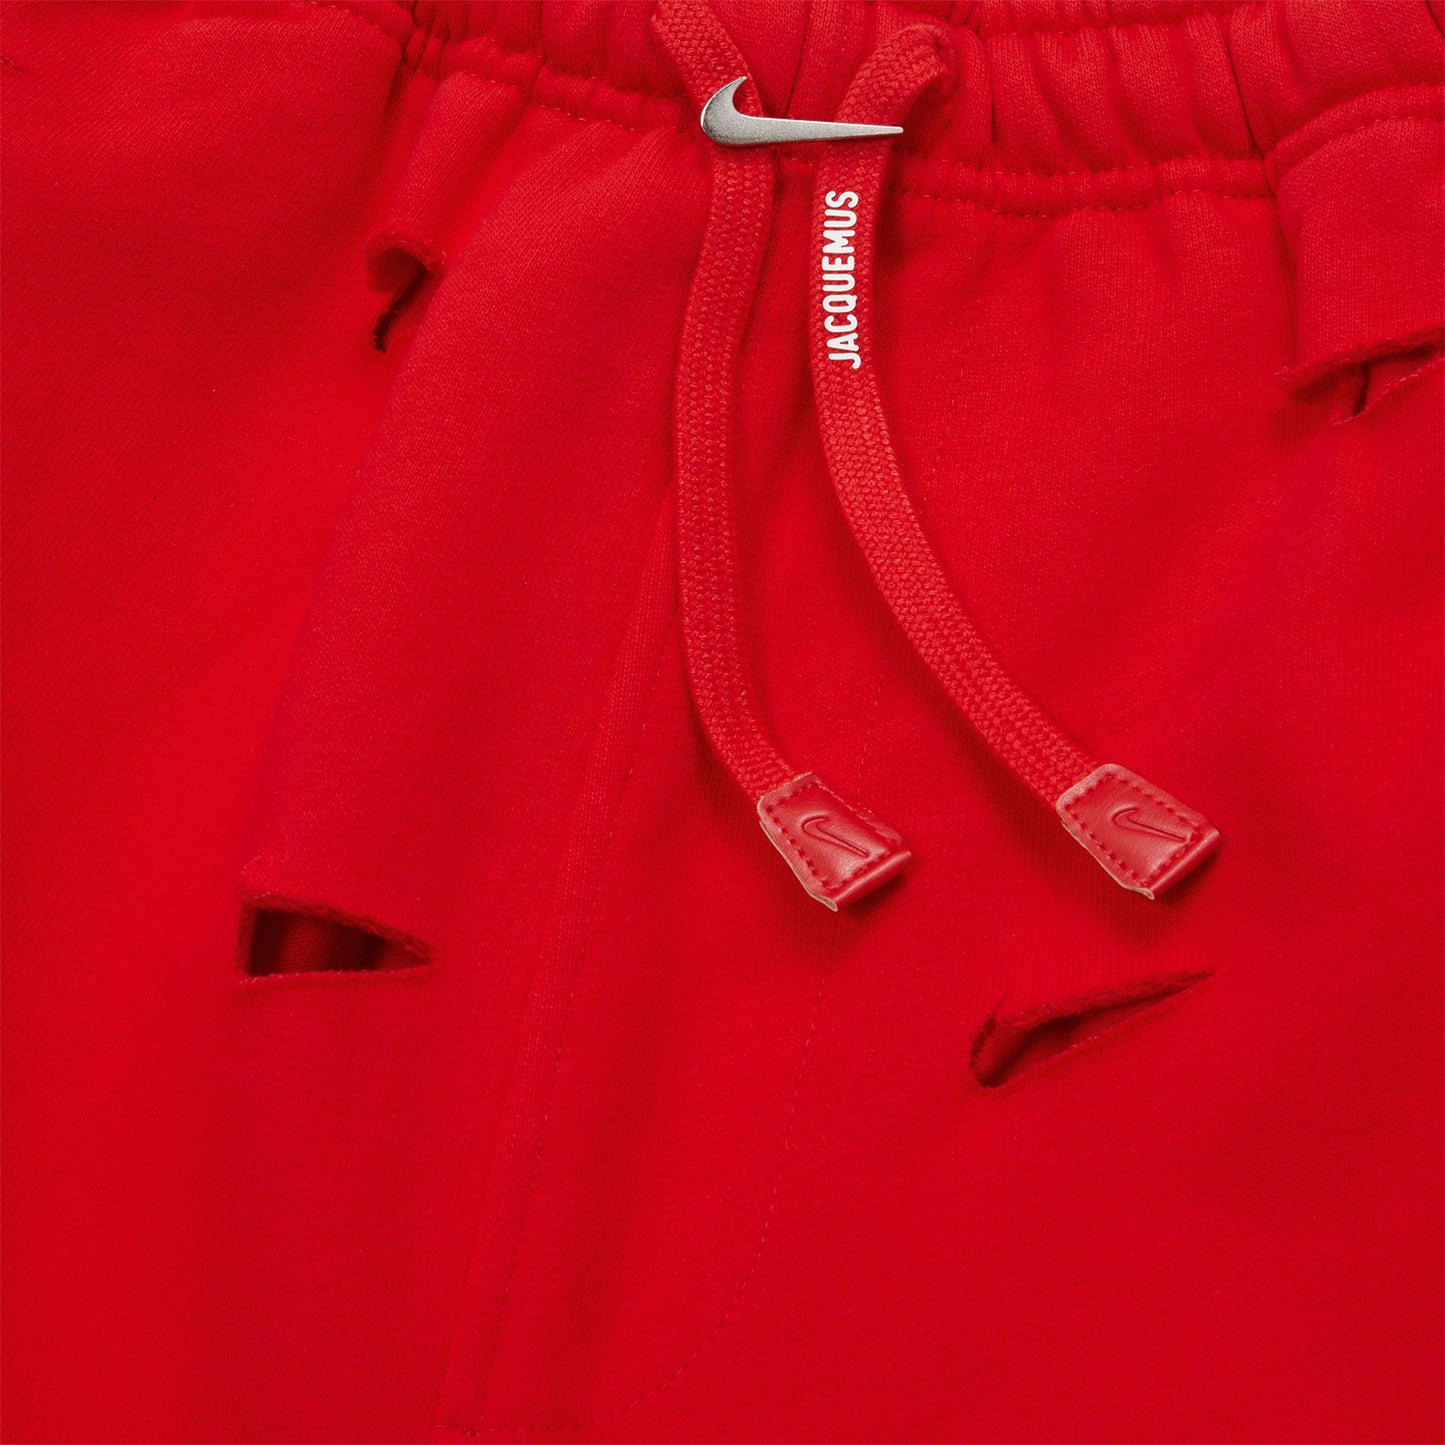 Nike x Jacquemus Cutout Swoosh Pant (University Red)